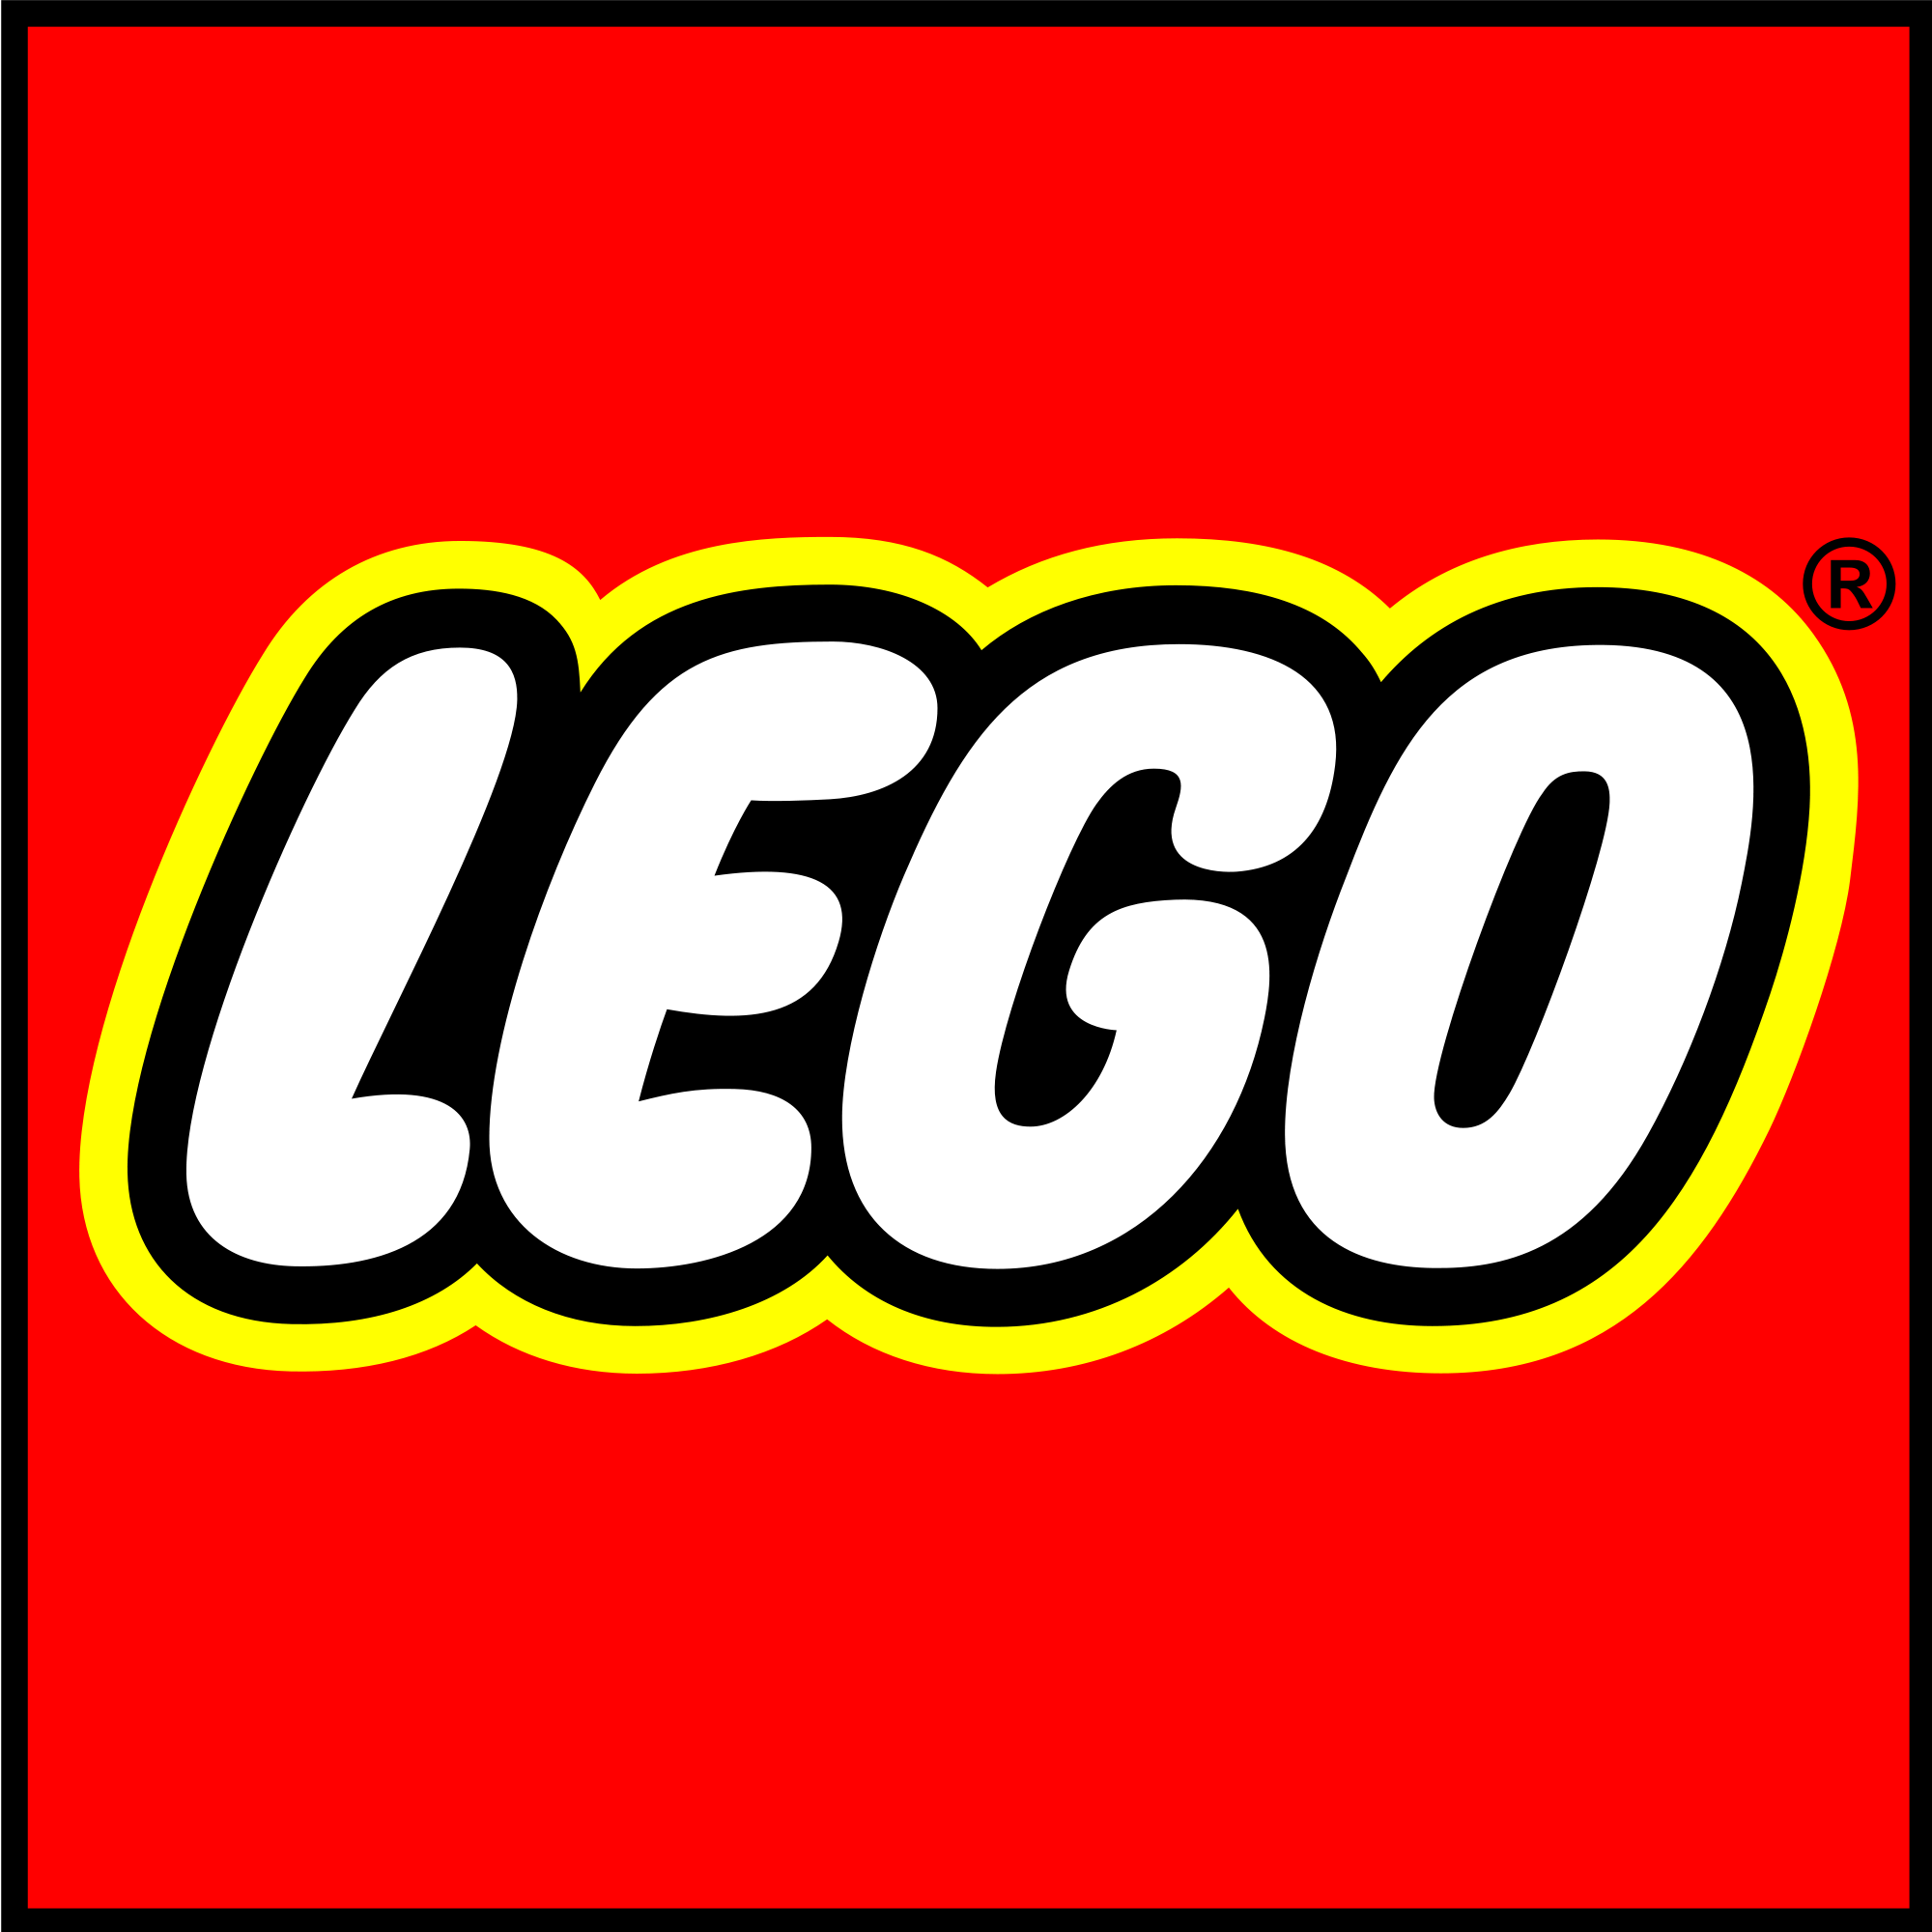 Lego - stärkste Market der Welt